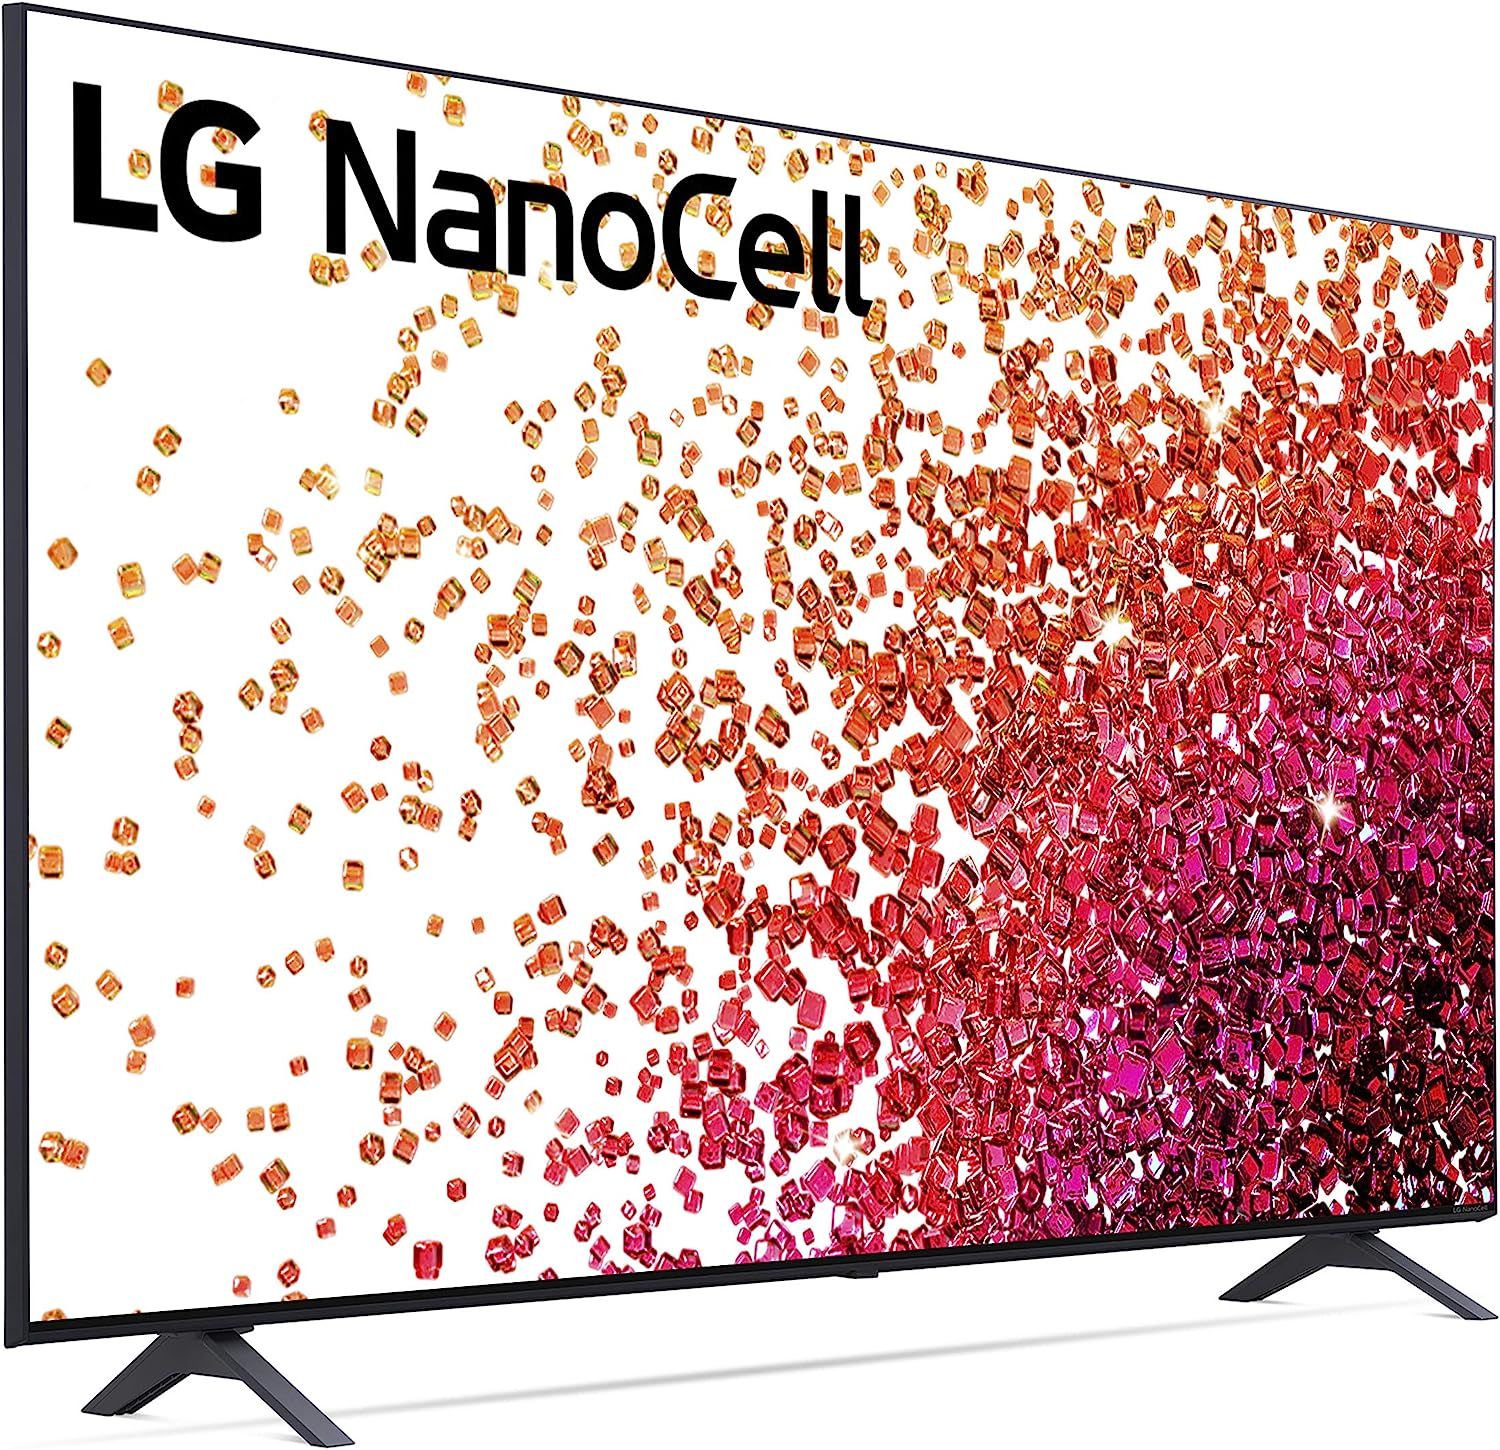 LG NanoCell 75 Series 50-inch